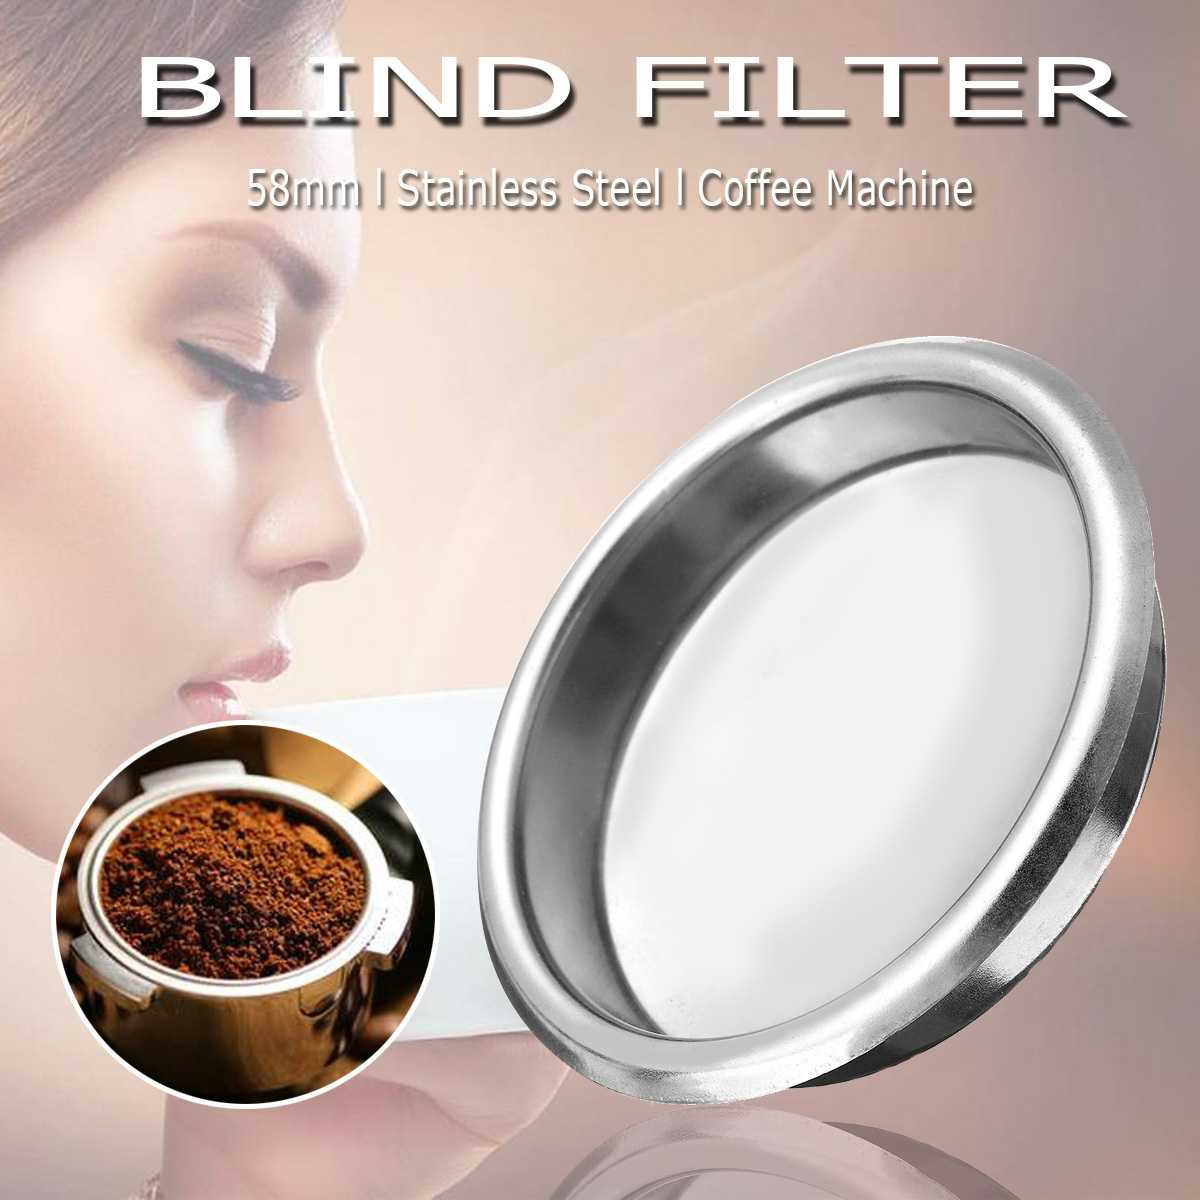 58mm Stainless Steel Blind Filter Espresso Coffee Machine Maker Backflush Flush Basket 1